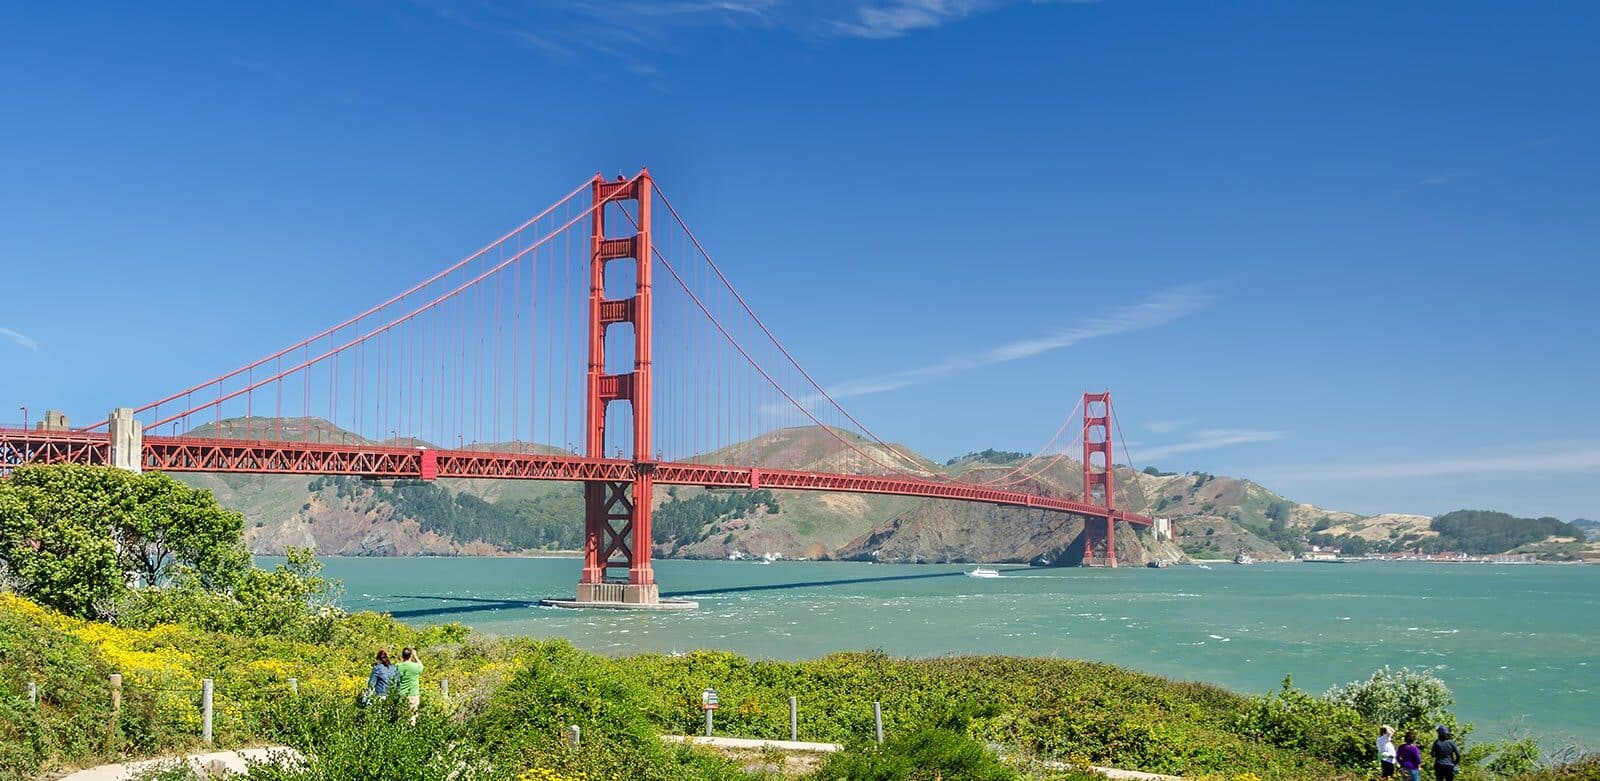 Bike Ride Over the Golden Gate Bridge